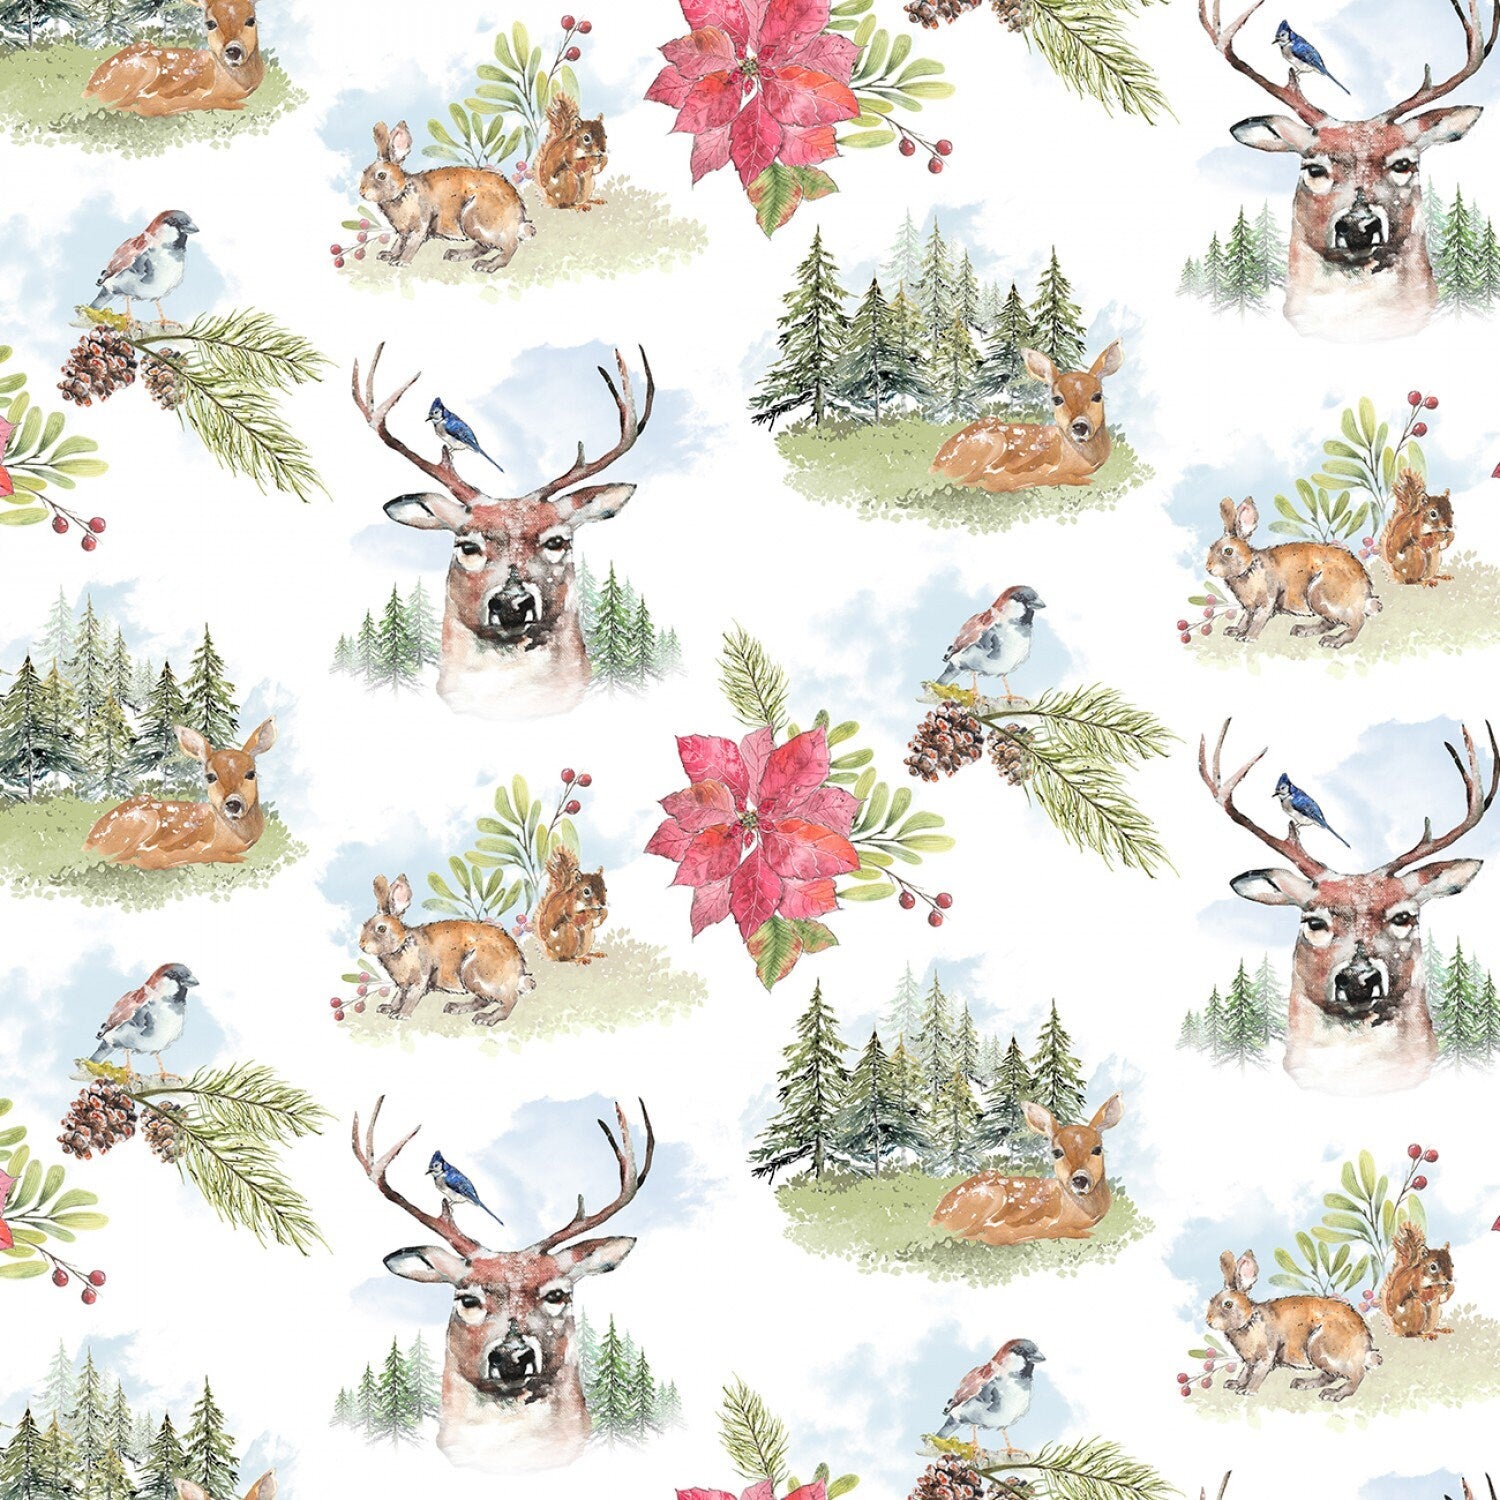 Joyful Winter Fat Quarter Bundle with Panel, Clothworks FQ0419, Christmas Xmas Animals Quilt Fabric